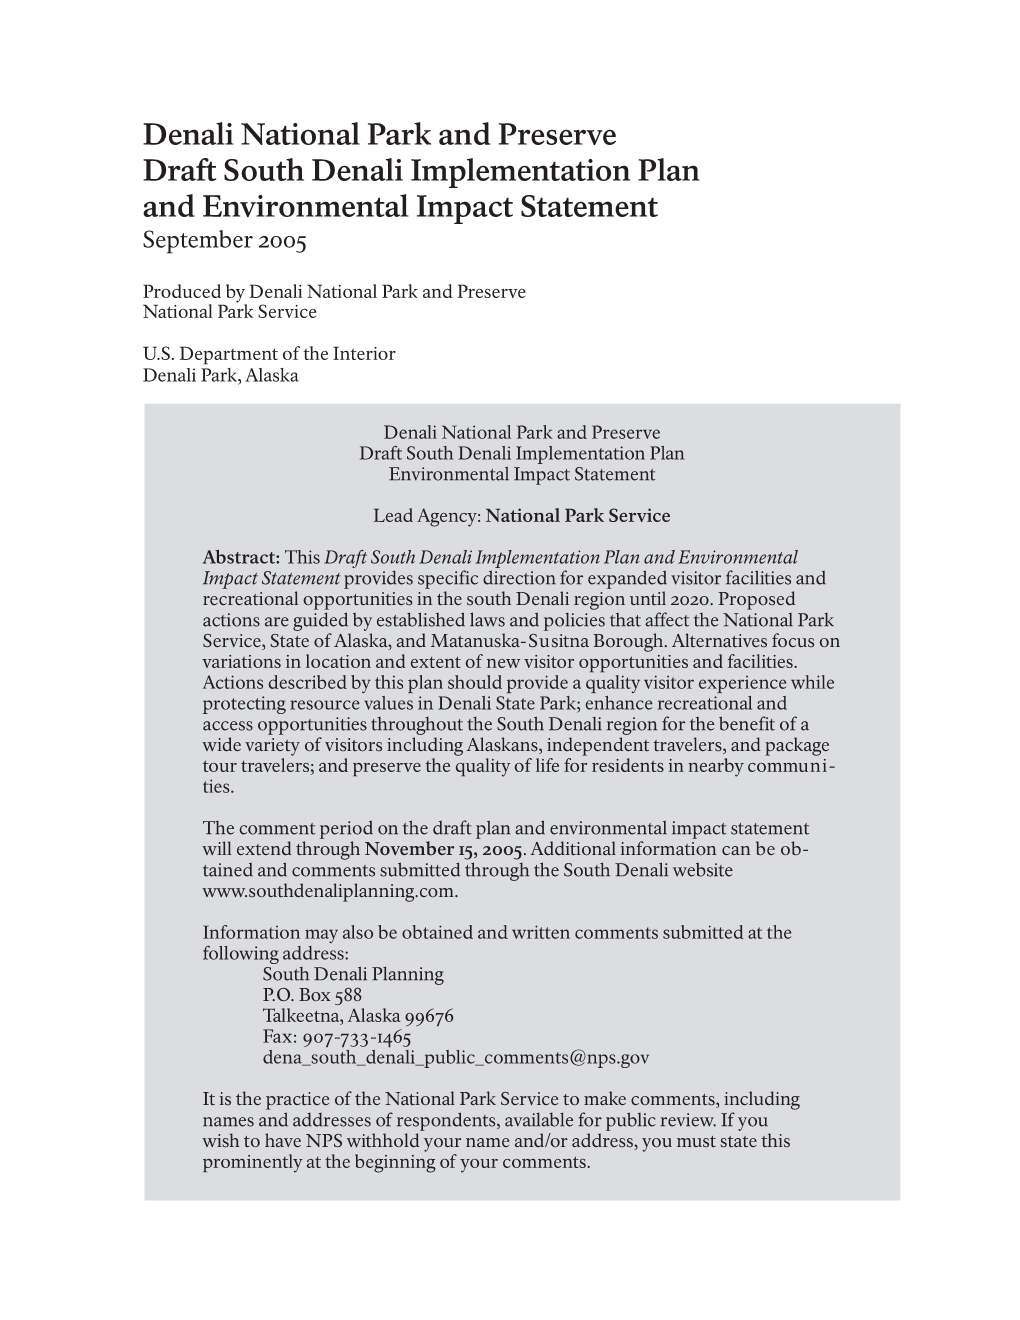 Draft South Denali Implementation Plan and Environmental Impact Statement September 2005